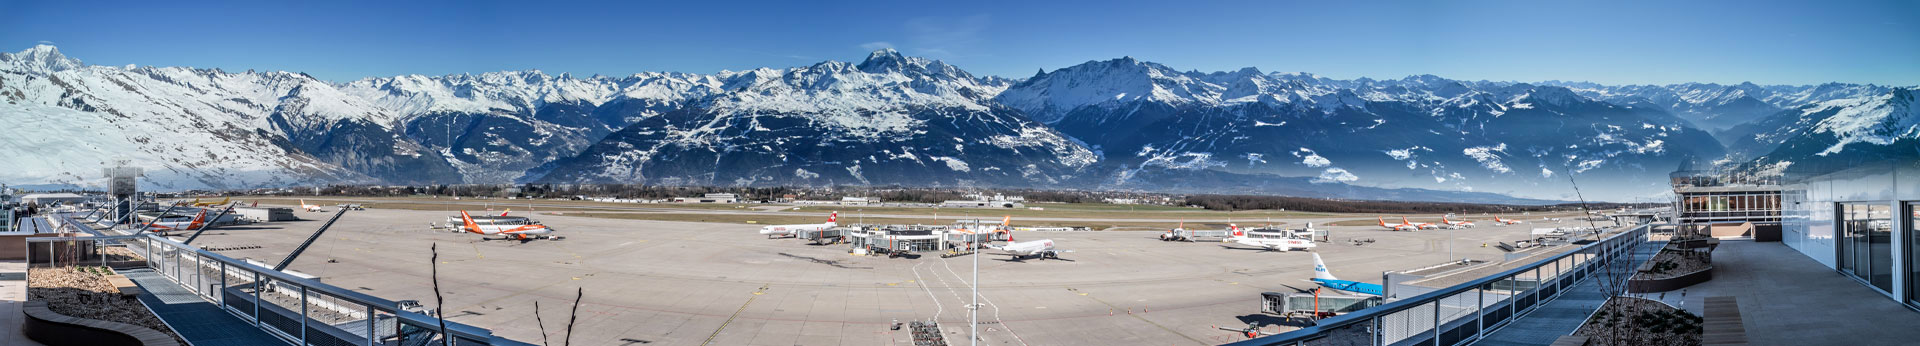 Taxi aéroport de Genève vers les stations de ski des Arcs